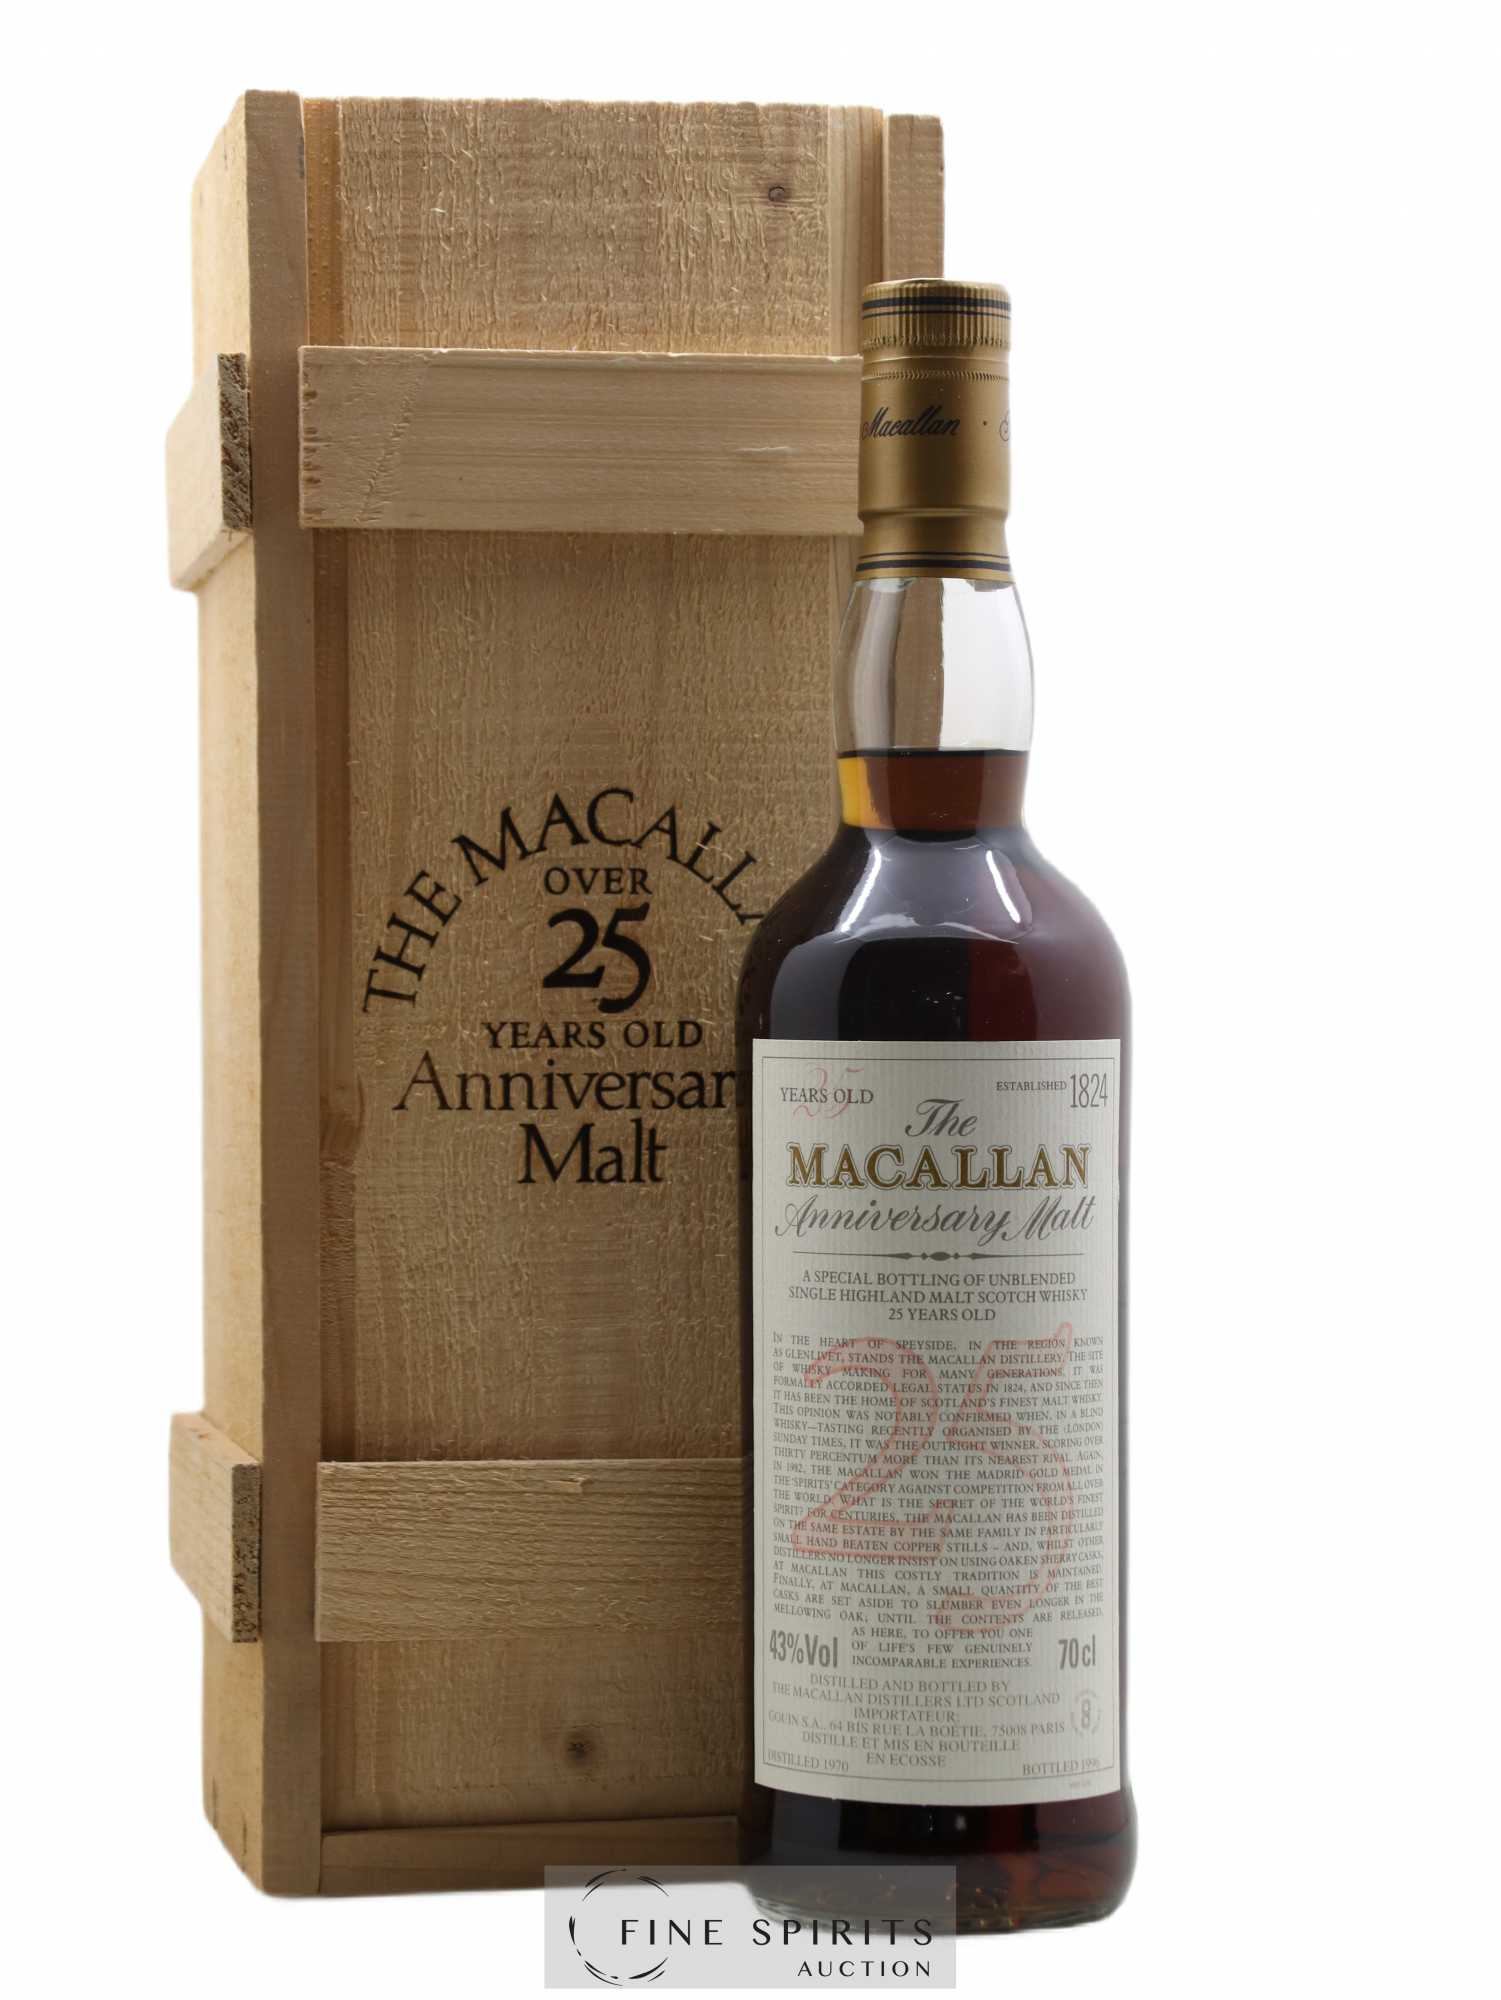 Macallan (The) 25 years 1970 Of. Anniversary Malt bottled 1996 Special Bottling 